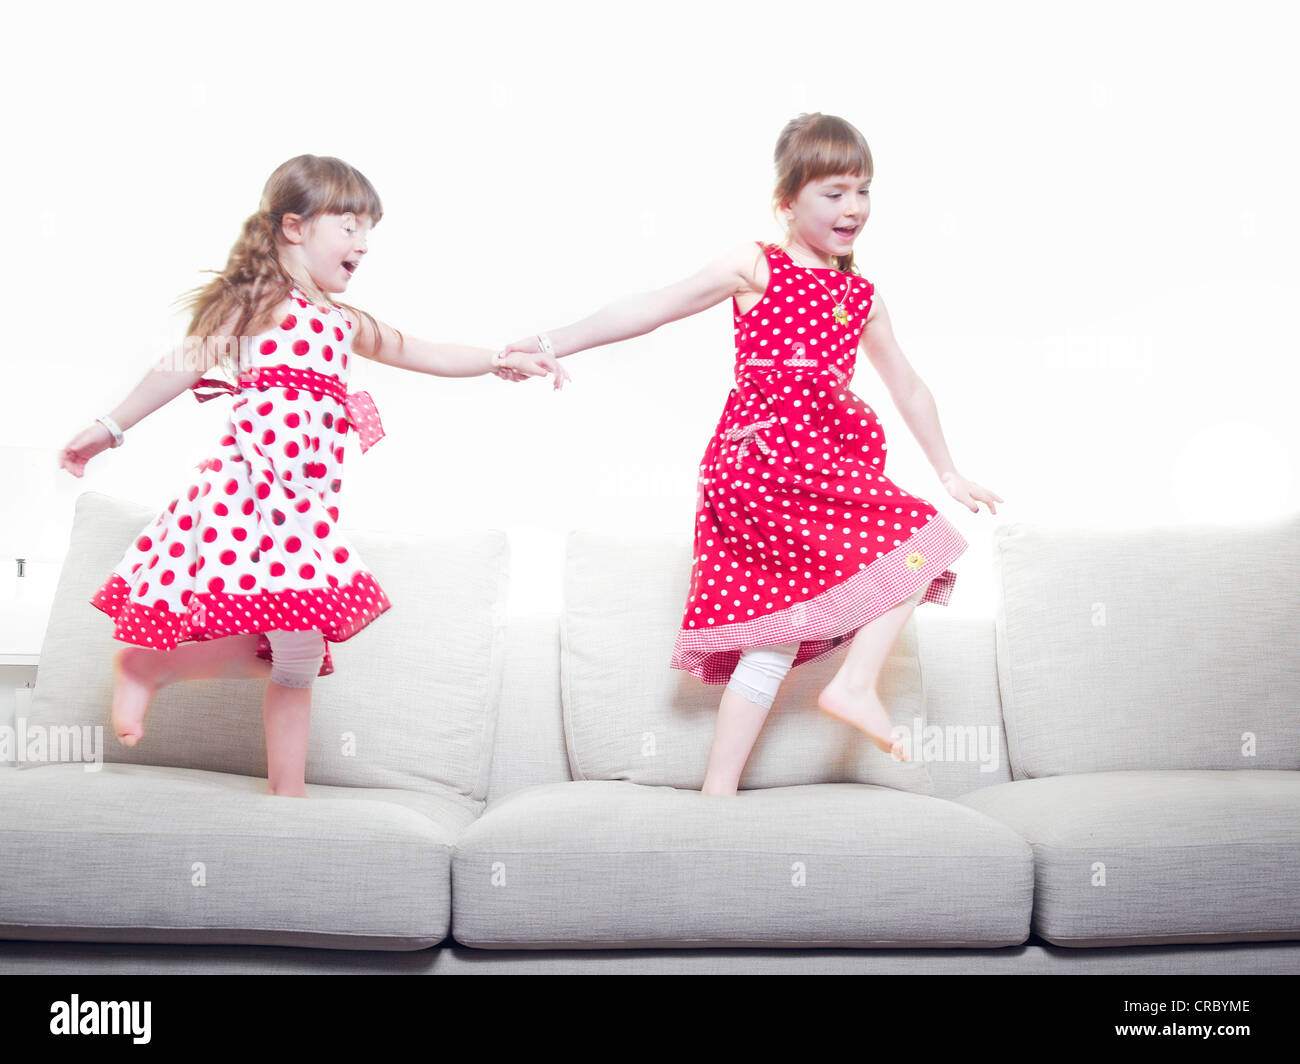 Girls playing together on sofa Stock Photo